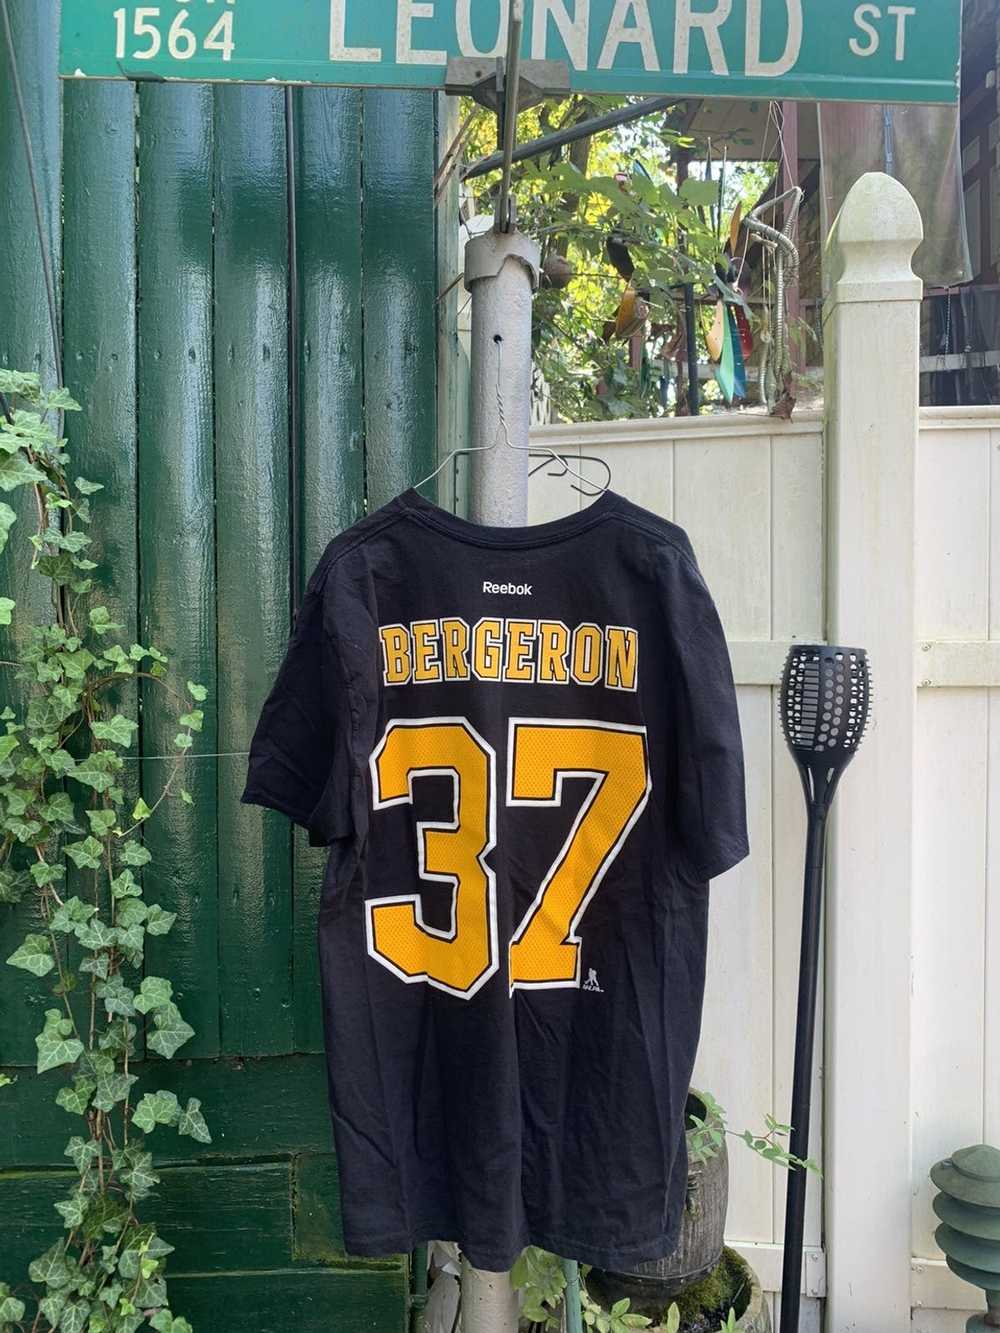 Patrice Bergeron Boston Bruins Fanatics Black Jersey L